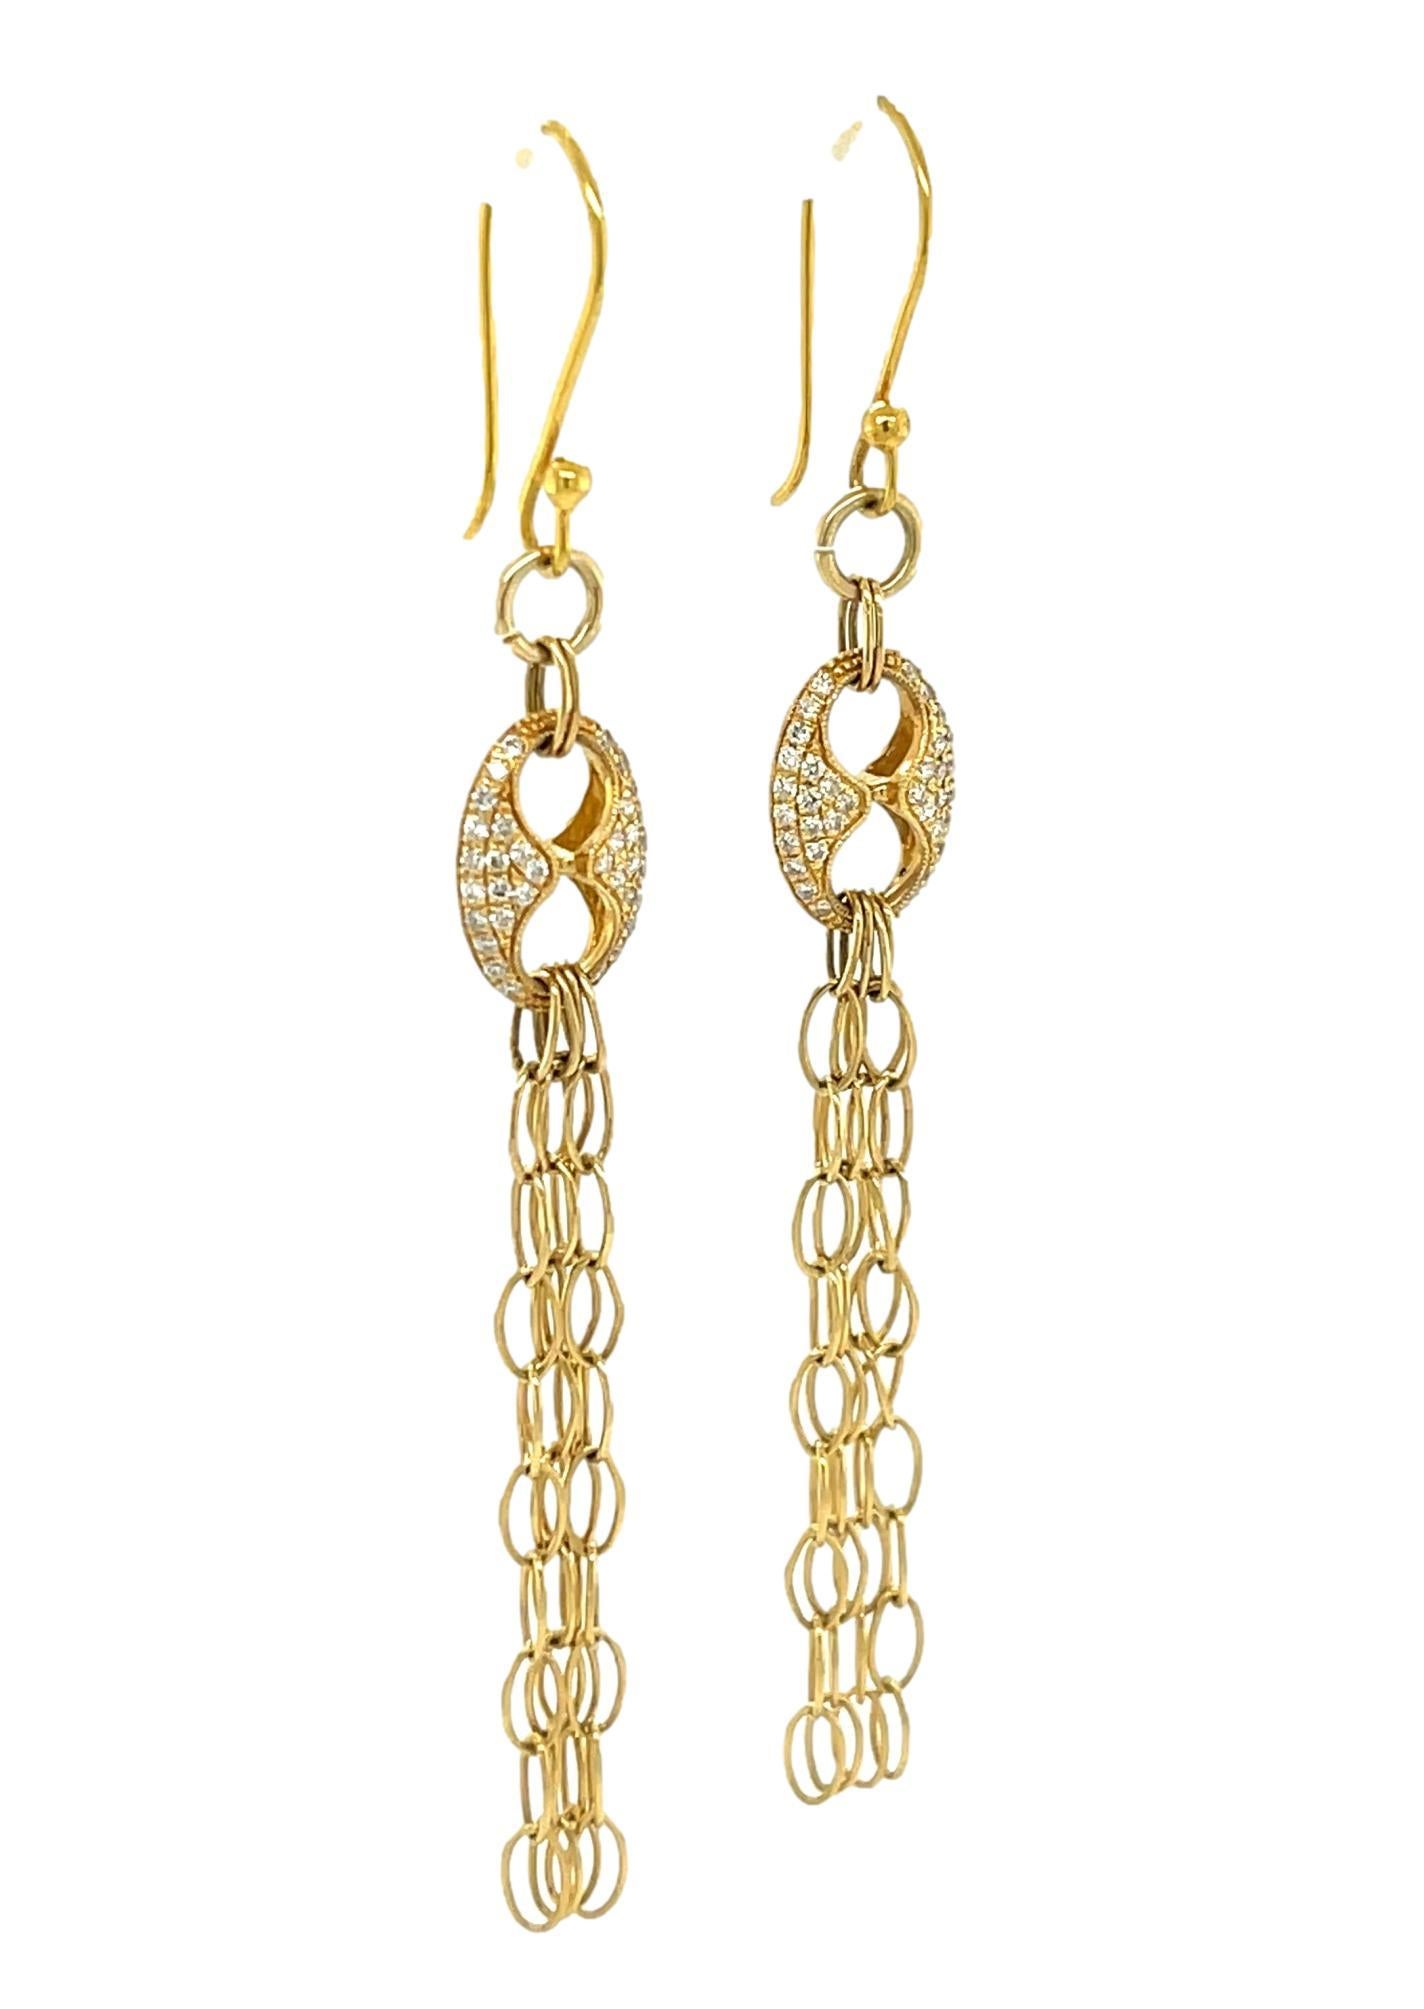 Brilliant Cut Diamond Dangling Hoop Earrings in 18KY Gold  For Sale